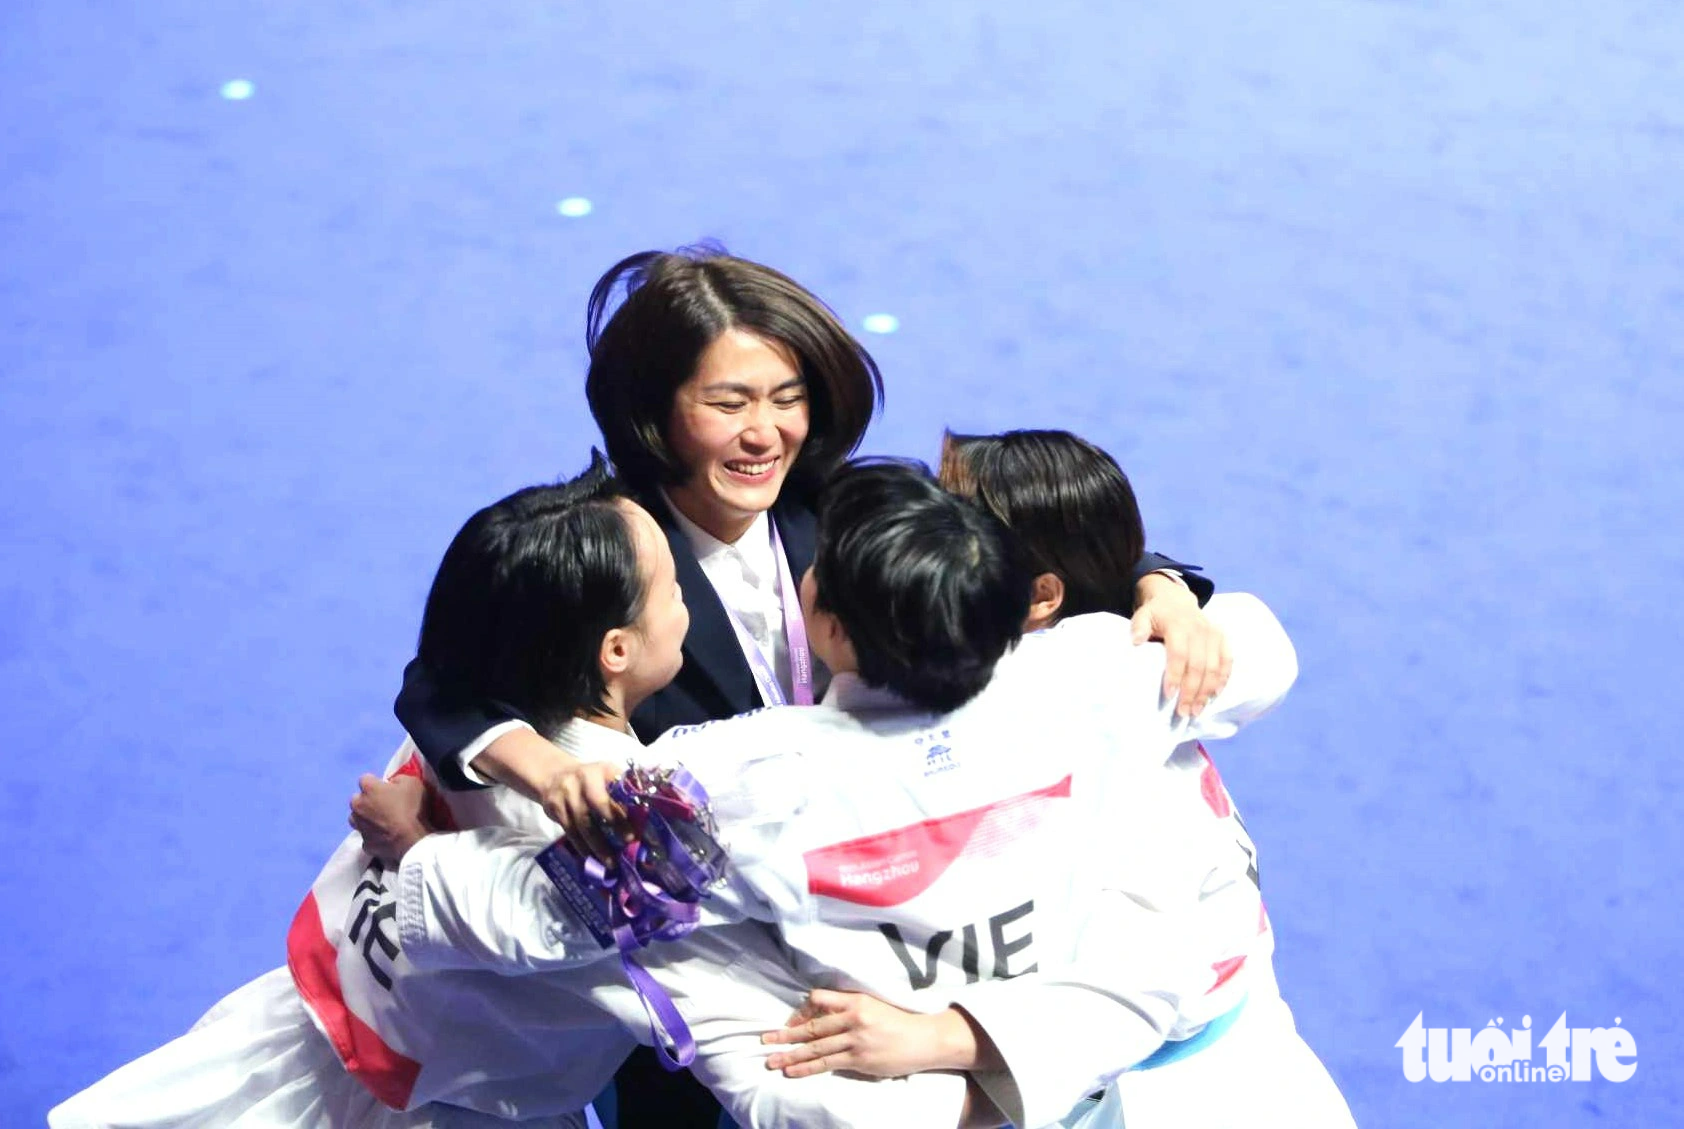 Karate team wins Vietnam’s 3rd gold medal at Asian Games